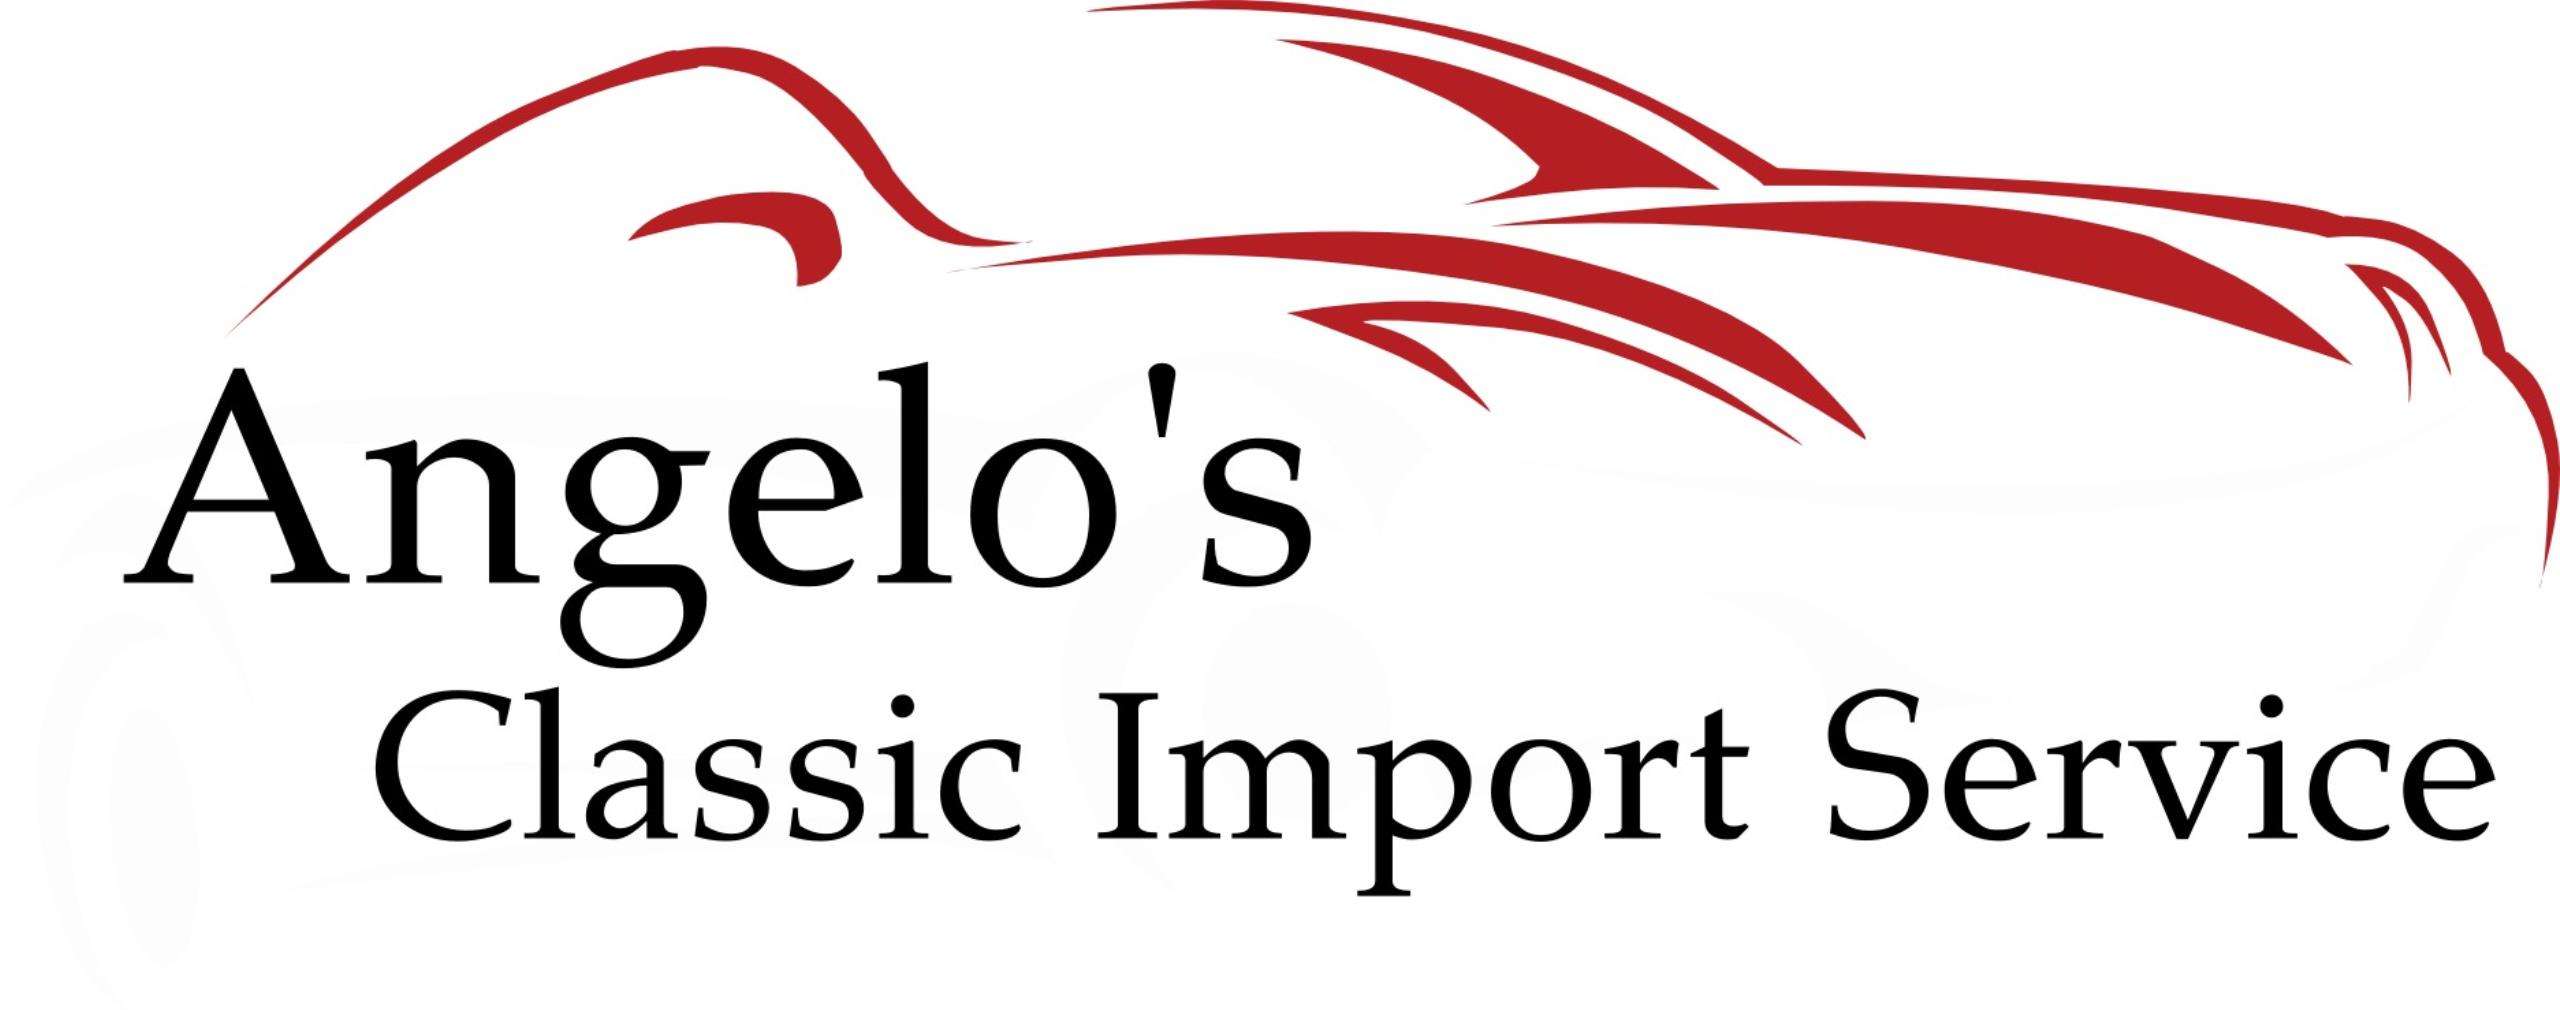 Angelo's Classic Import Service, Inc. Logo